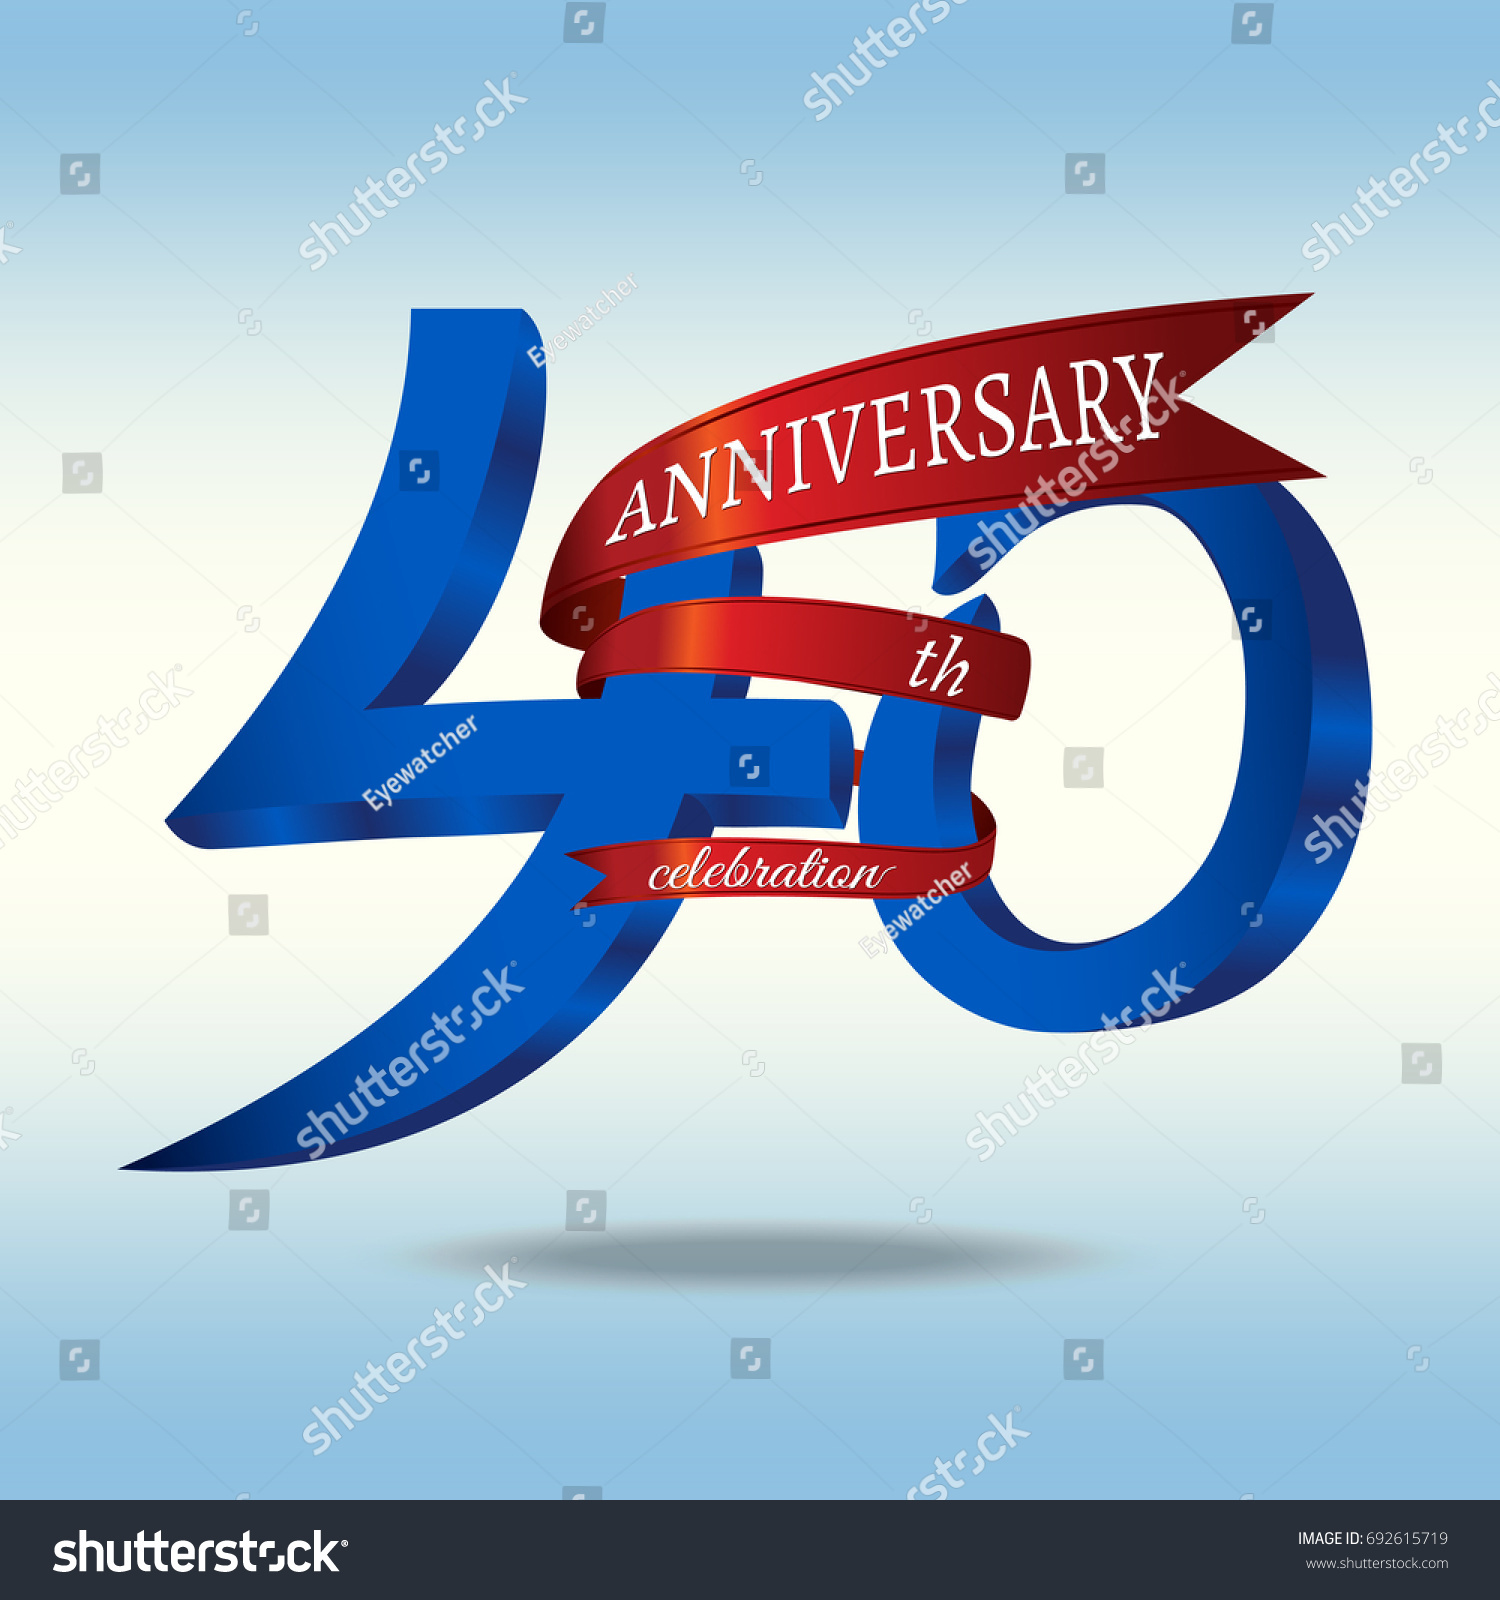 40th-anniversary-symbol-vector-stock-vector-royalty-free-692615719